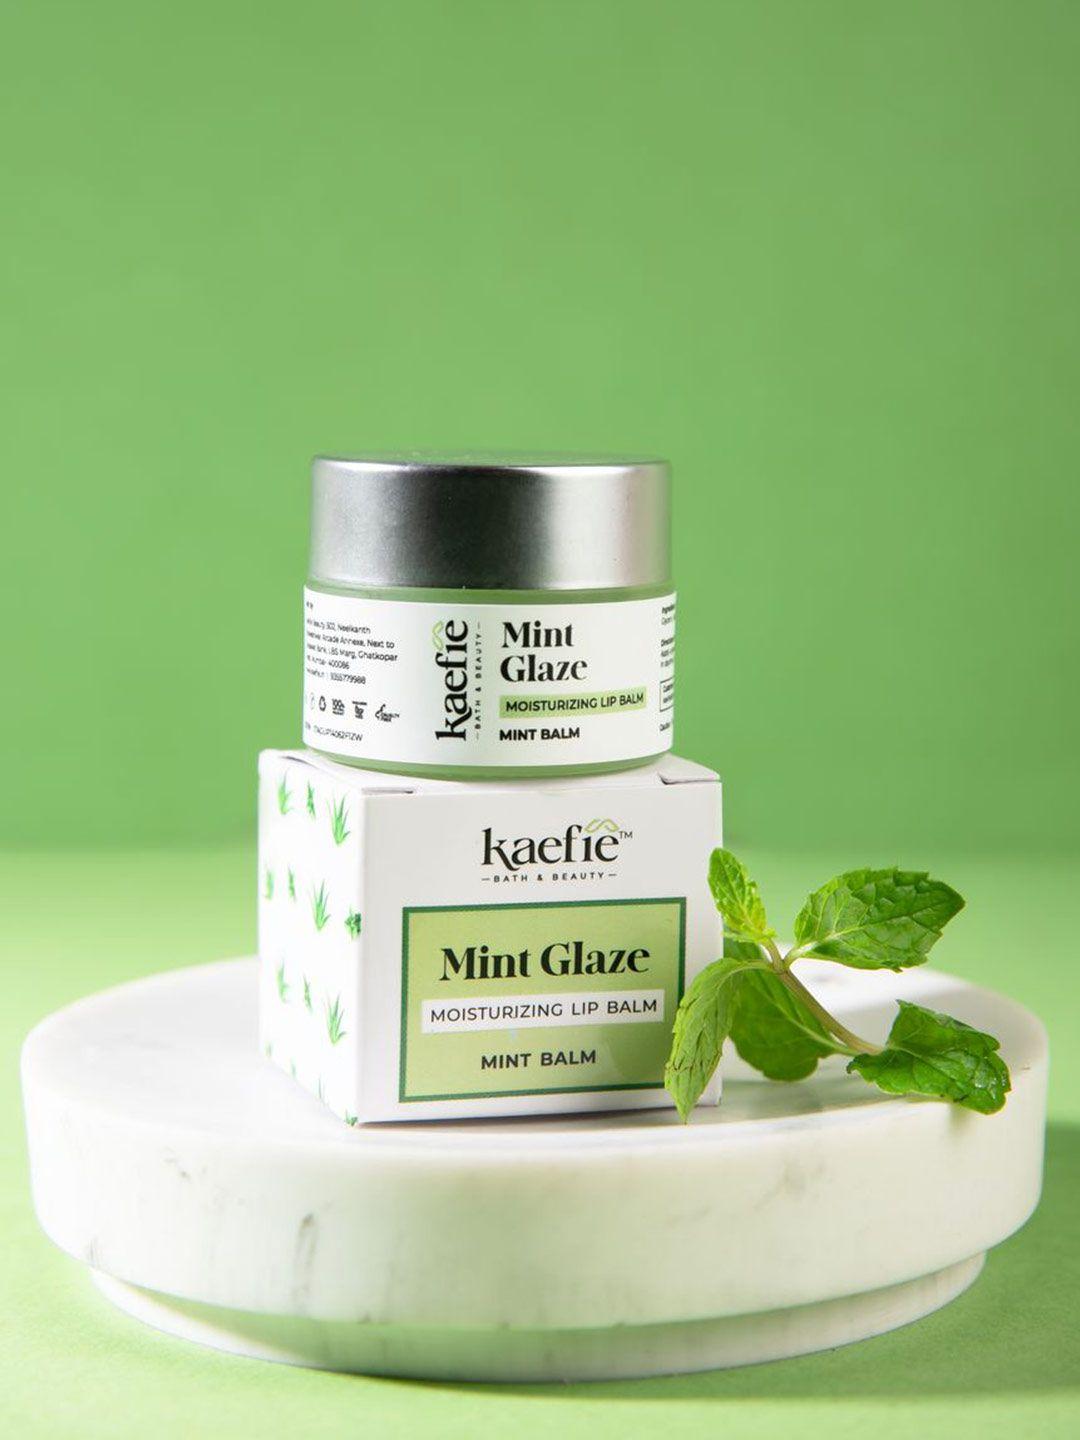 kaefie beauty mint glaze moisturizing lip balm with grapeseed oil & aloe vera - 15g